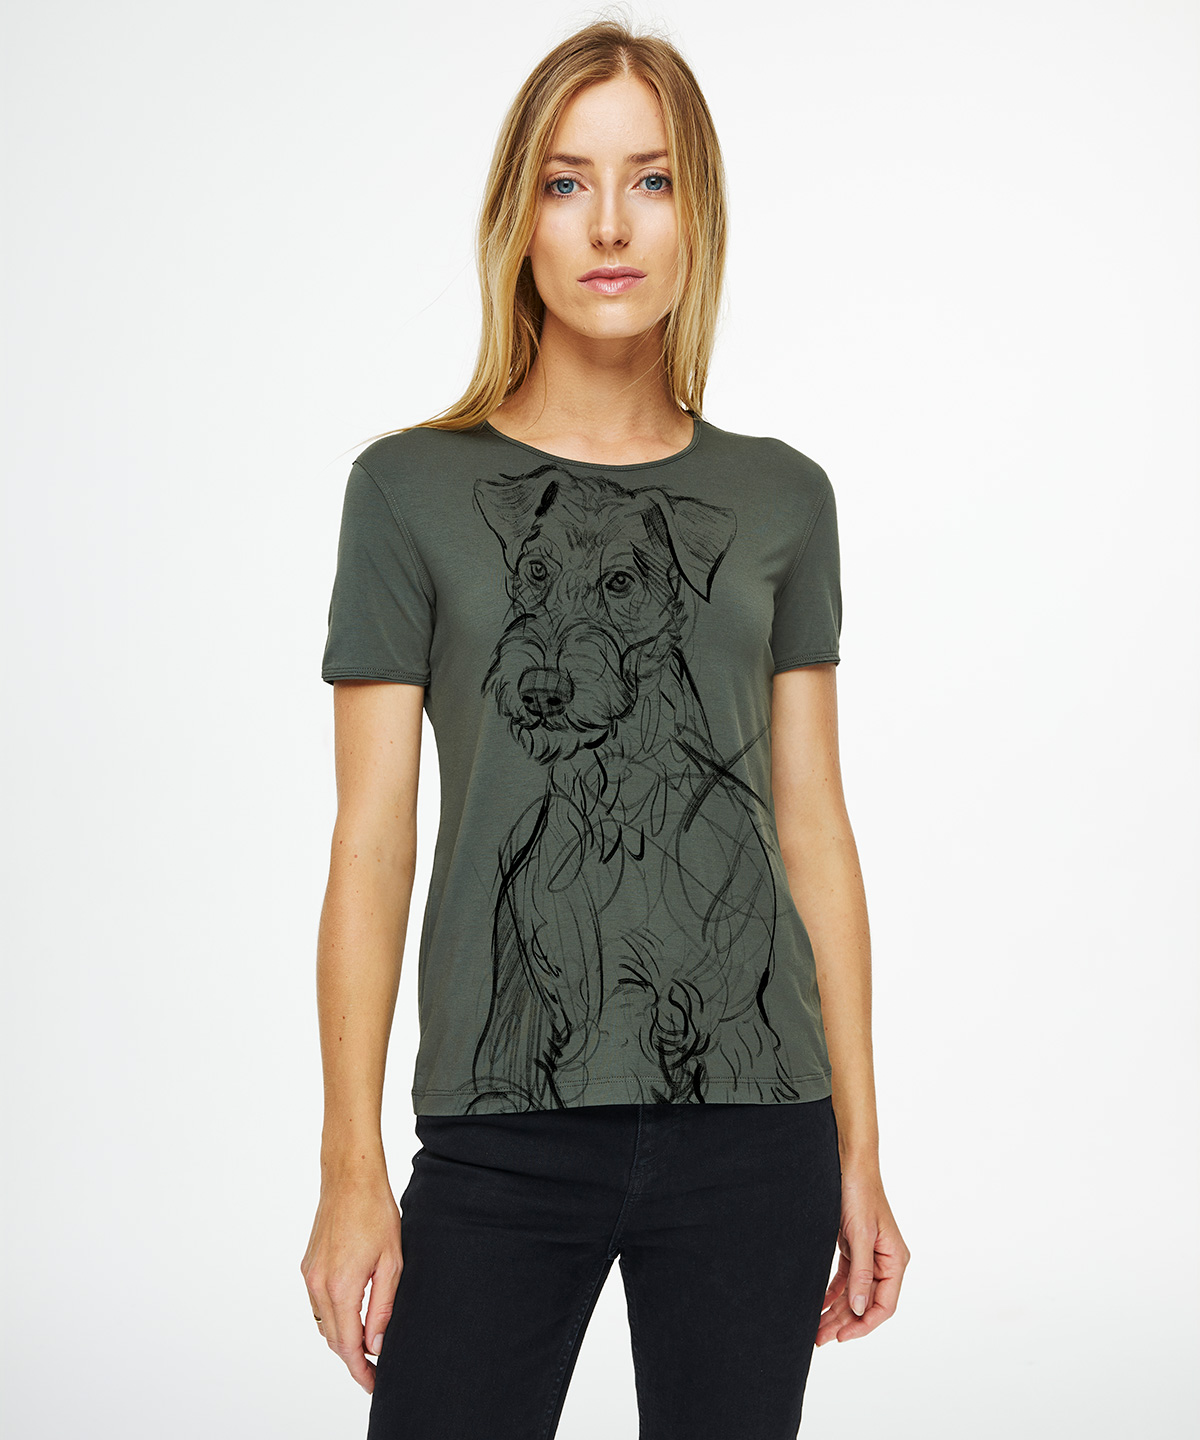 Airedale terrier khaki t-shirt woman